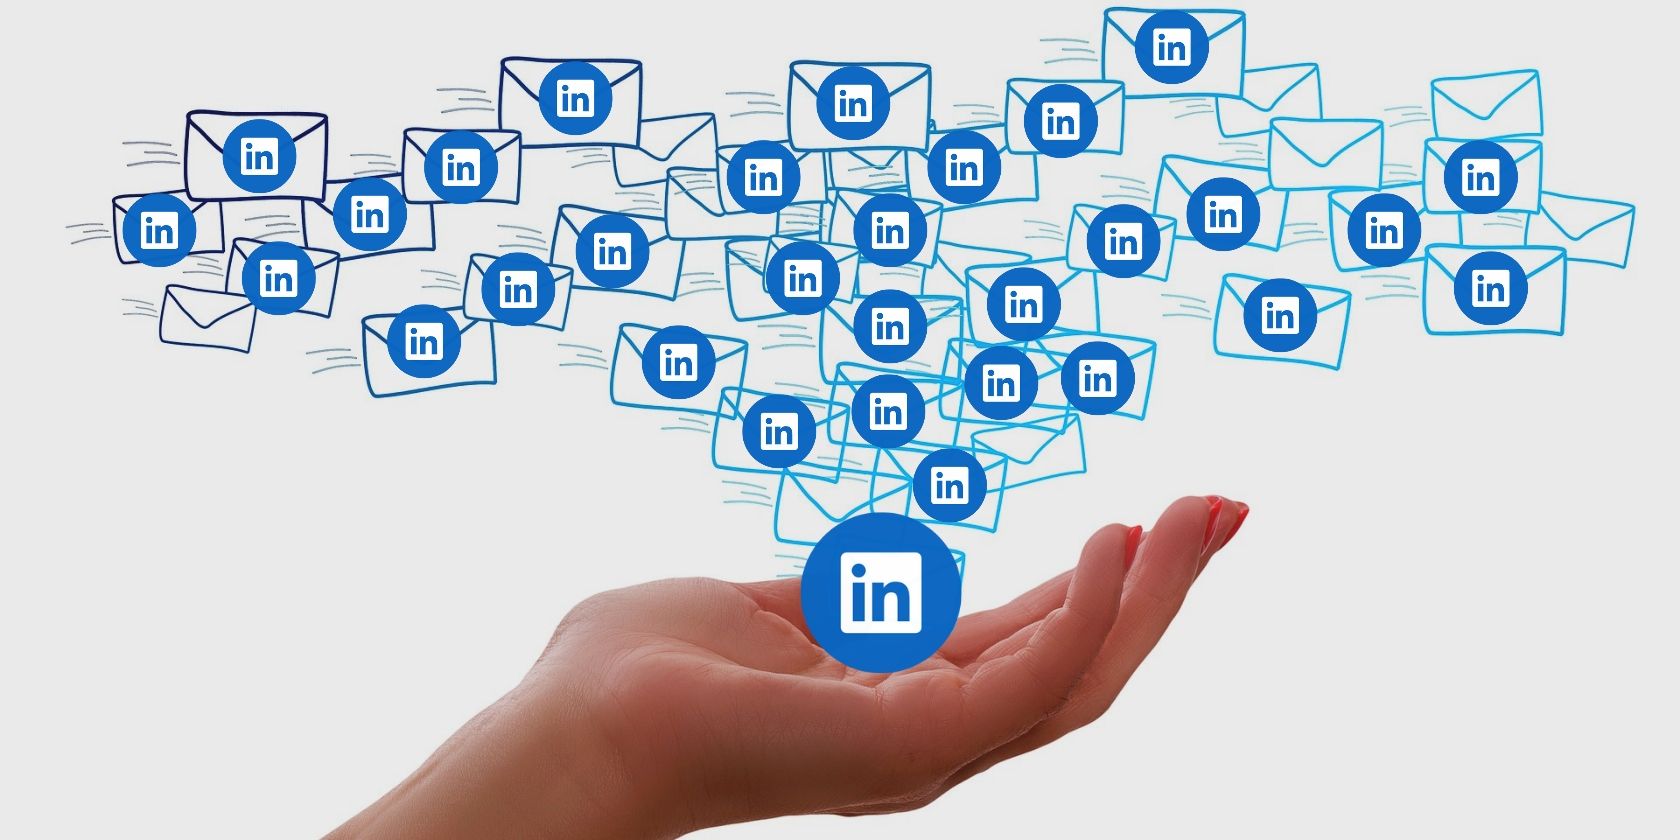 Gambar dengan logo LinkedIn di atas tangan